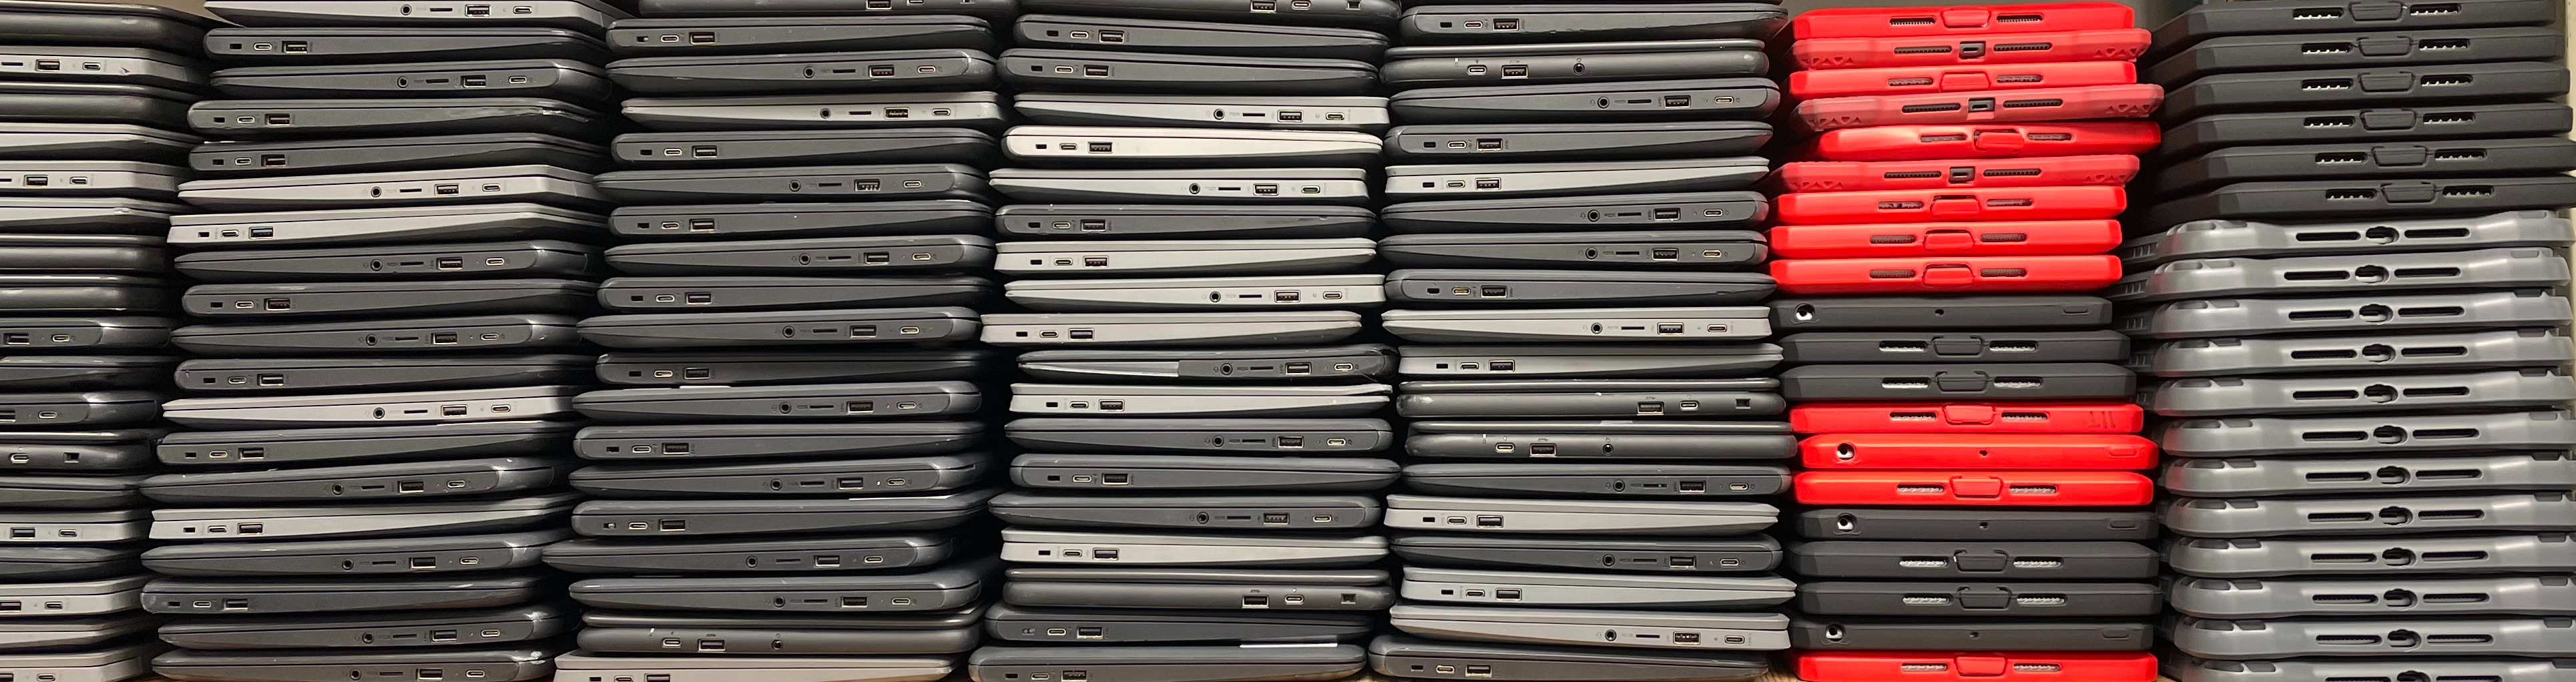 Stacks of Chromebooks and iPads